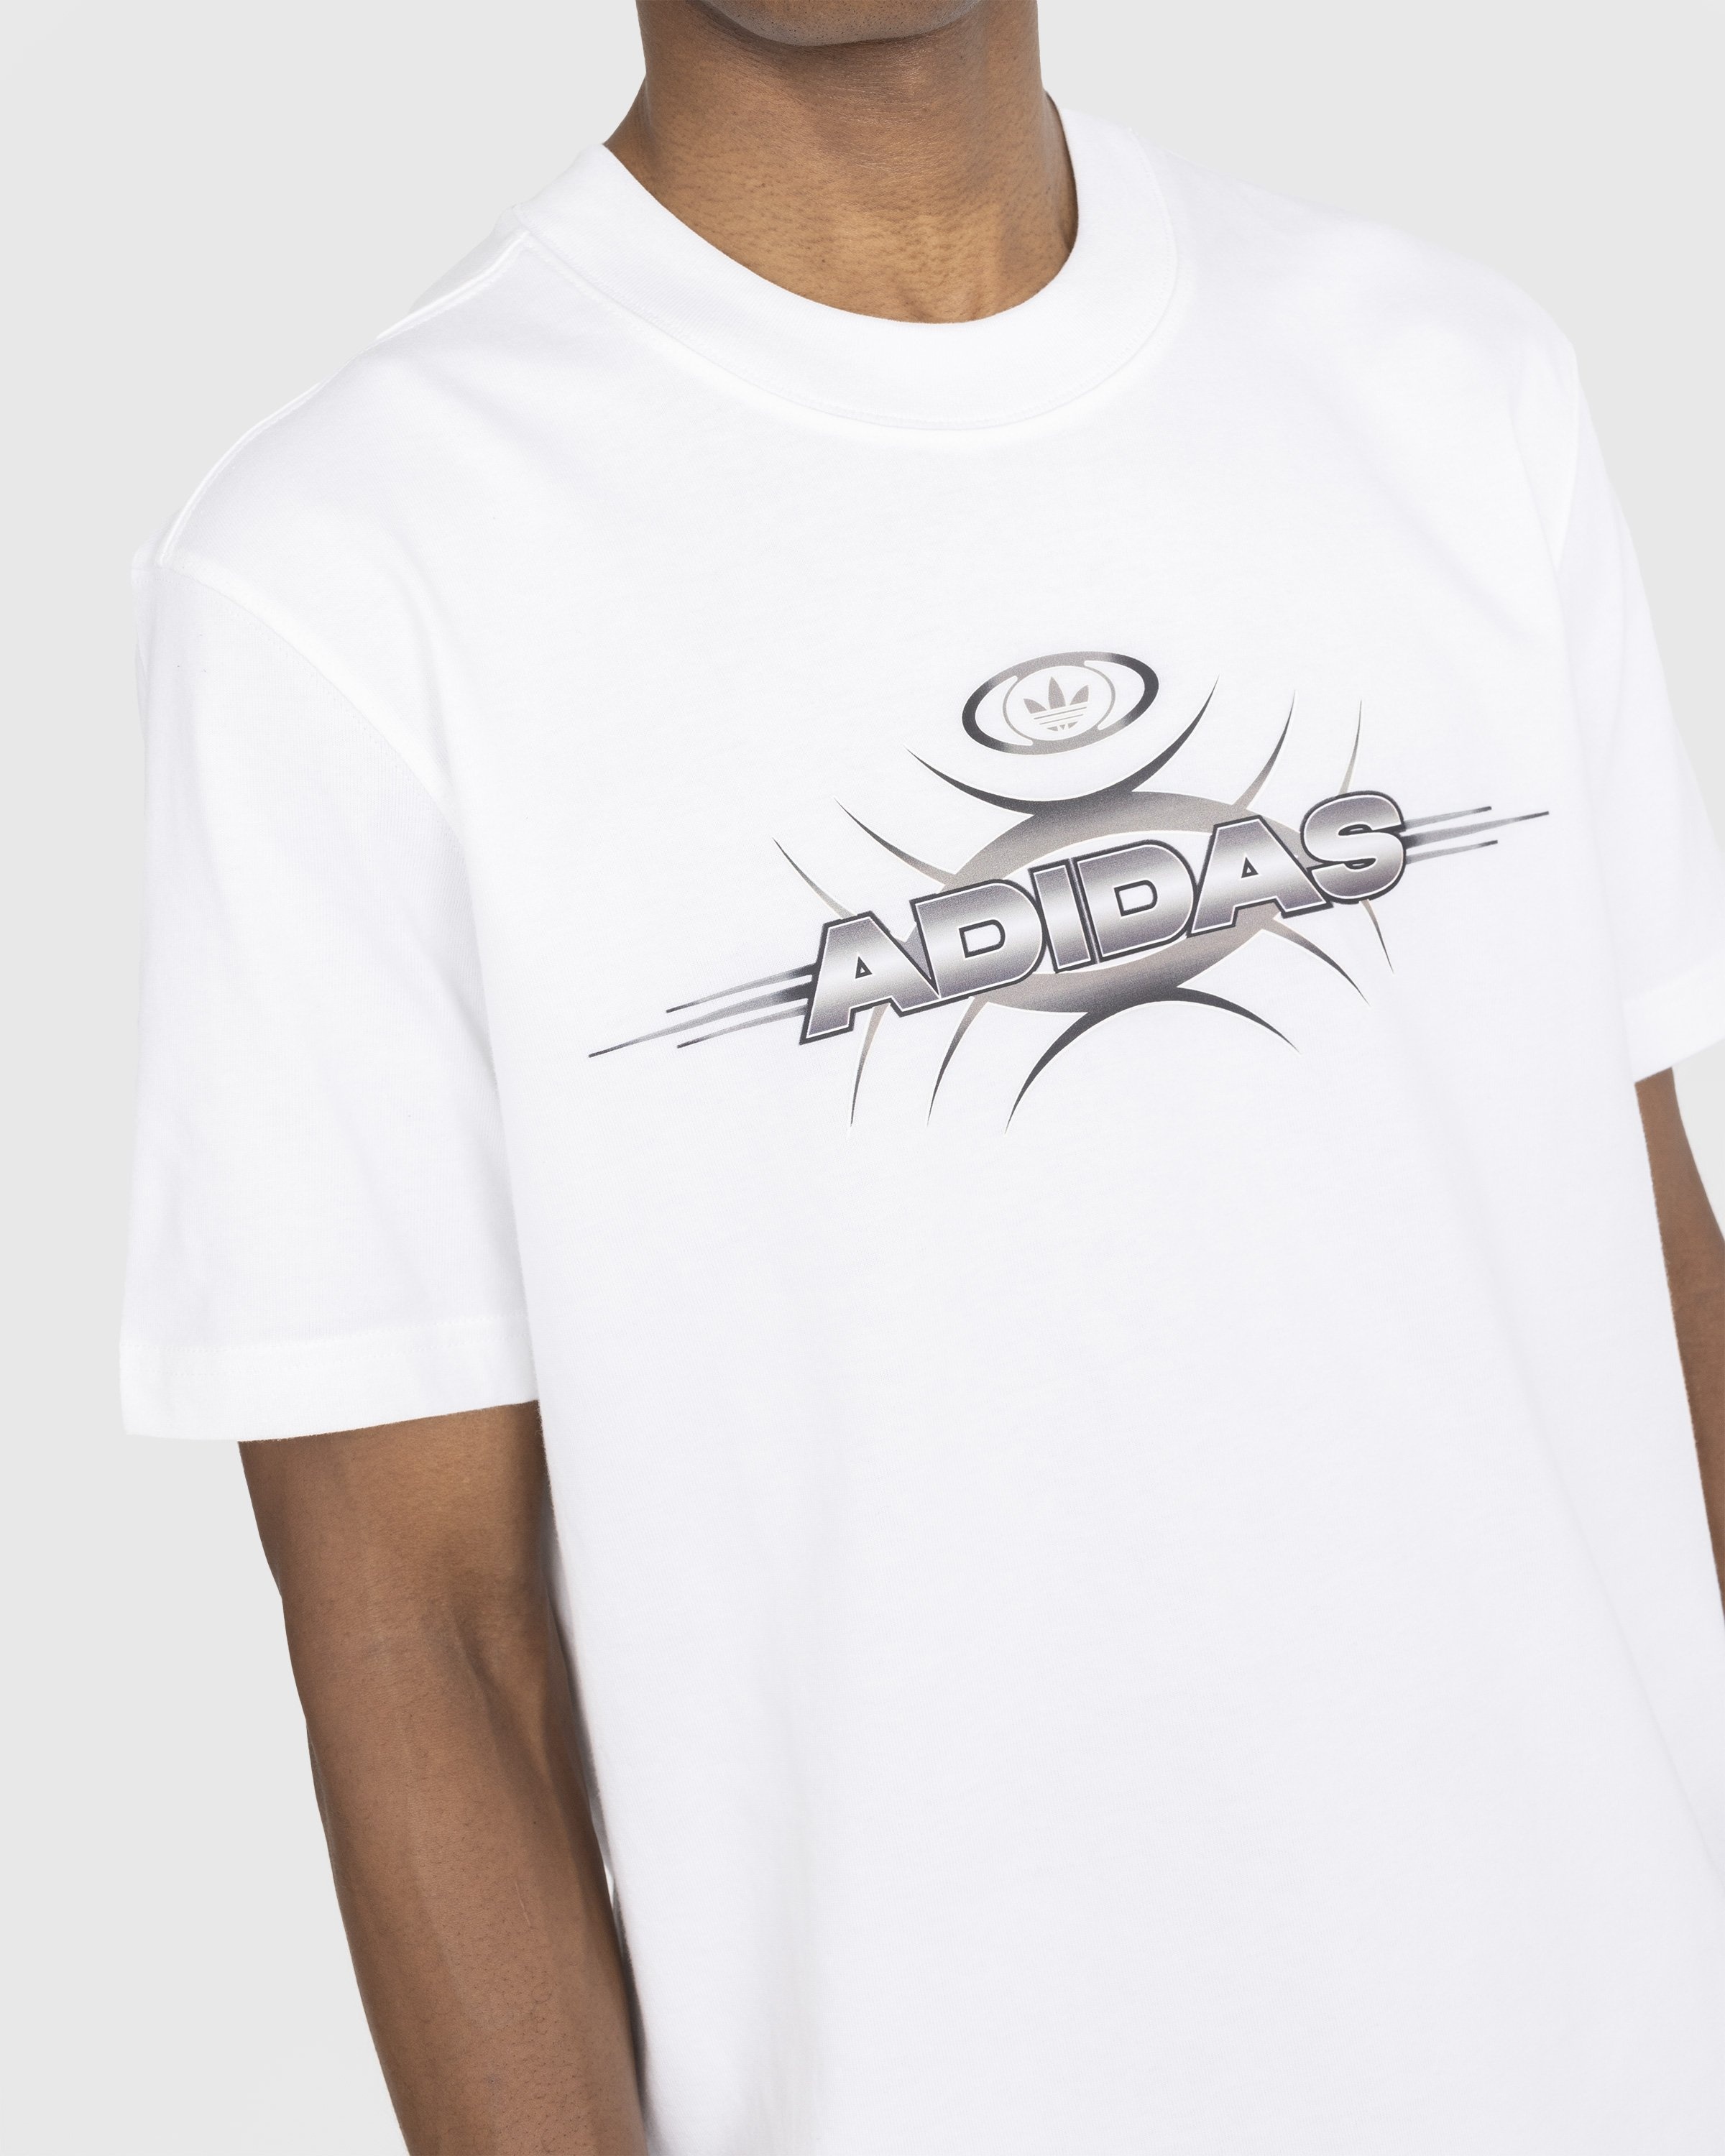 Adidas – Logo White Graphic T-Shirt | Highsnobiety Shop